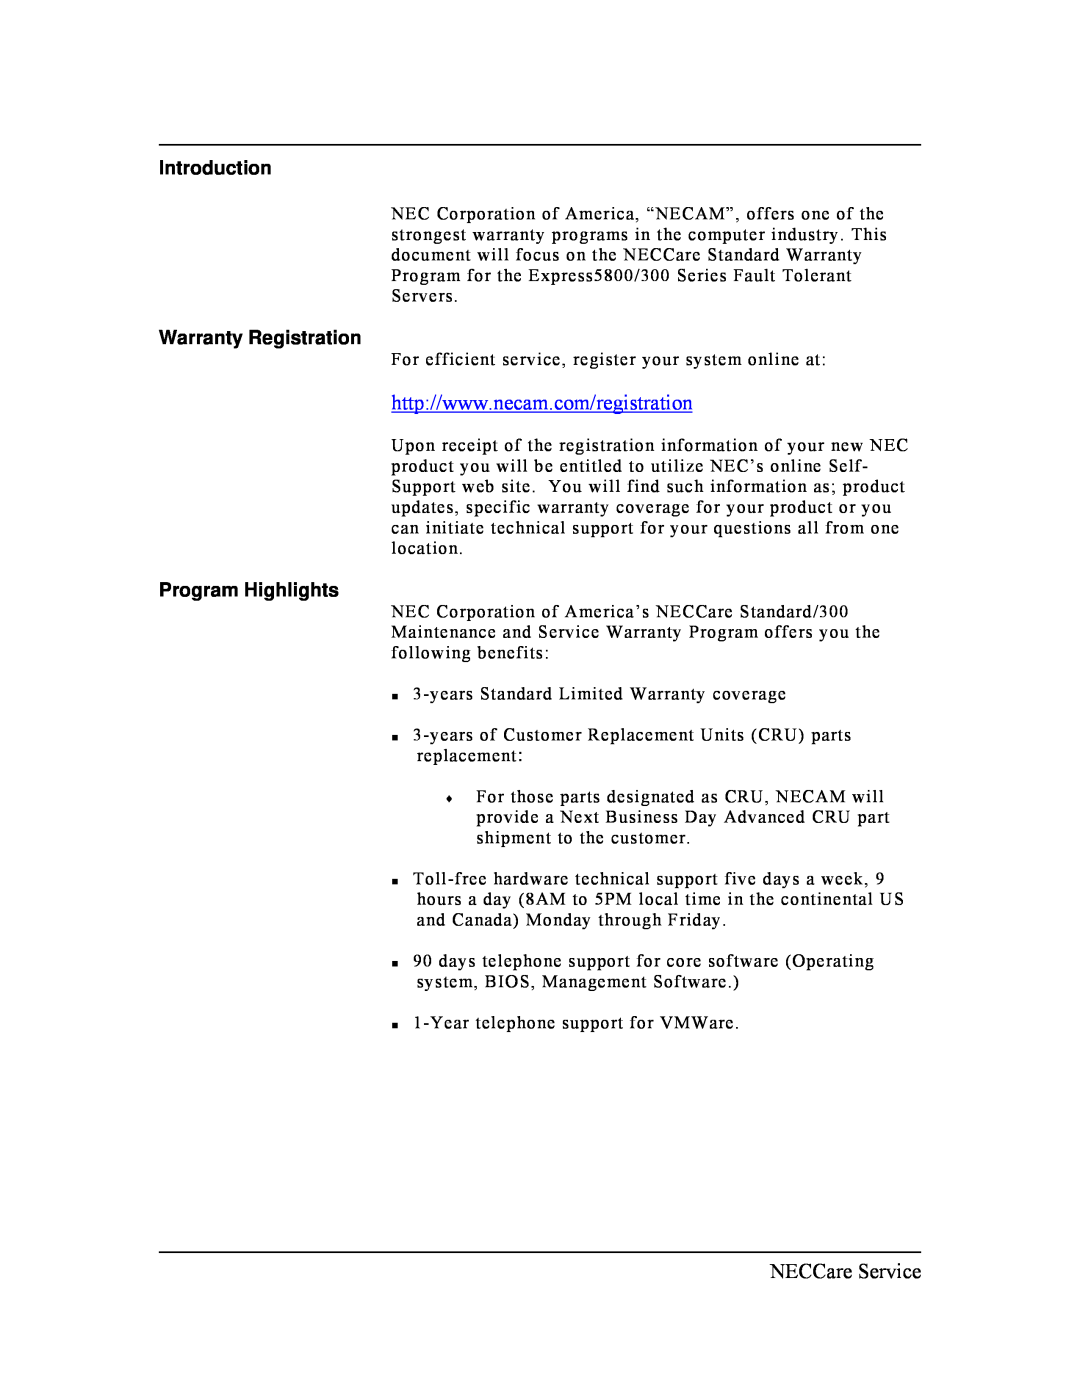 NEC Standard/300 warranty Introduction, Warranty Registration, Program Highlights 